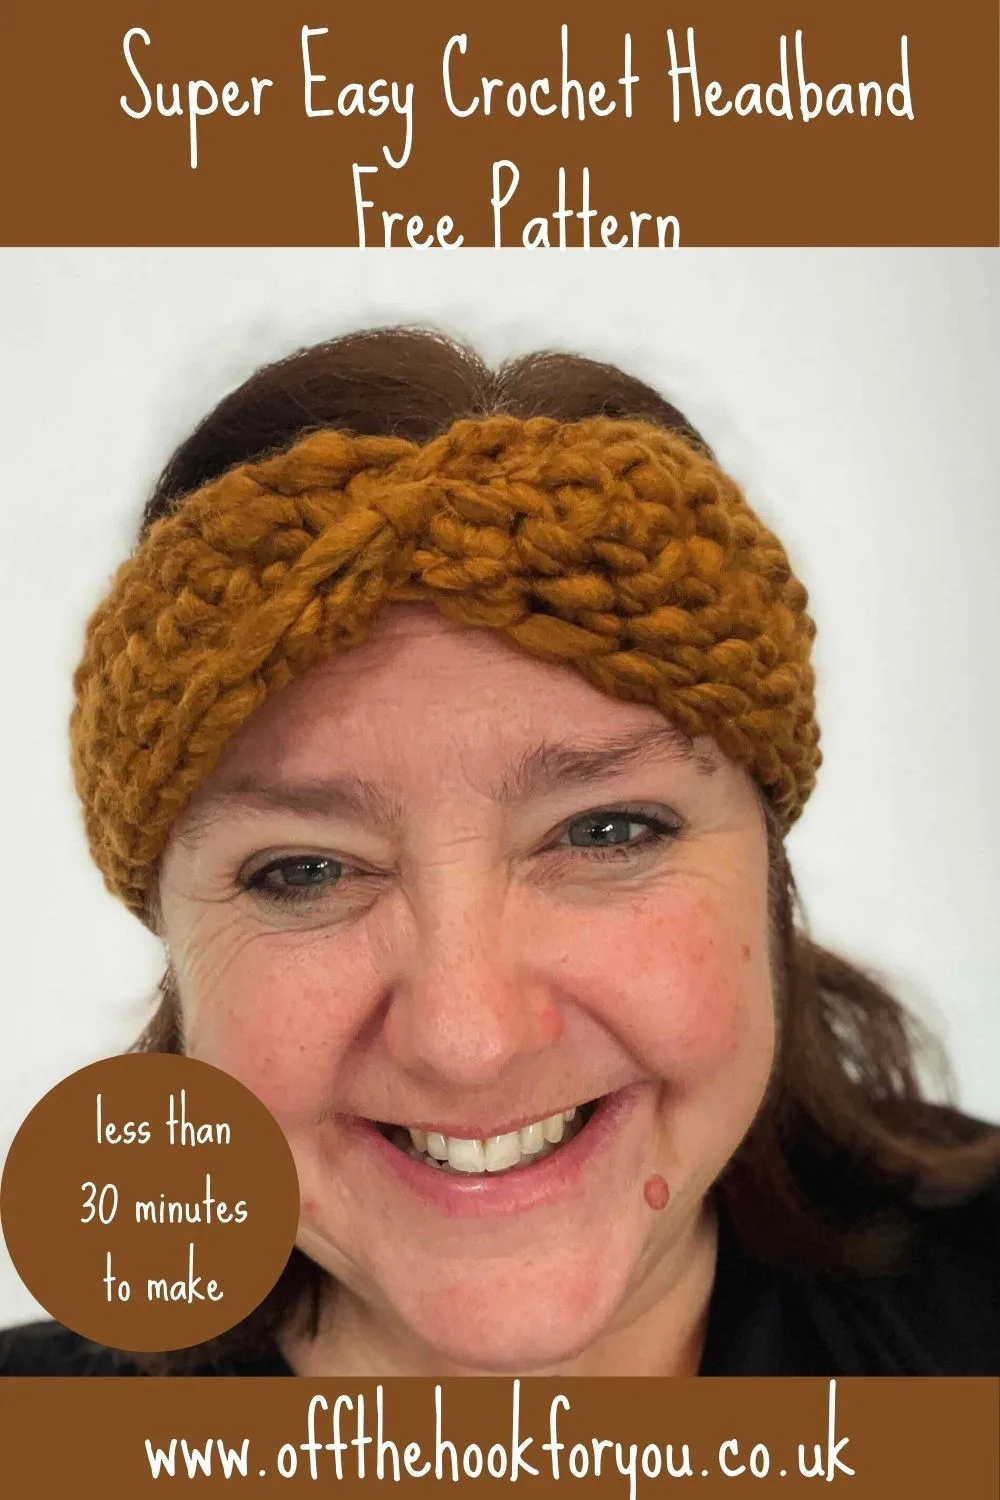 Super easy crochet headband free pattern